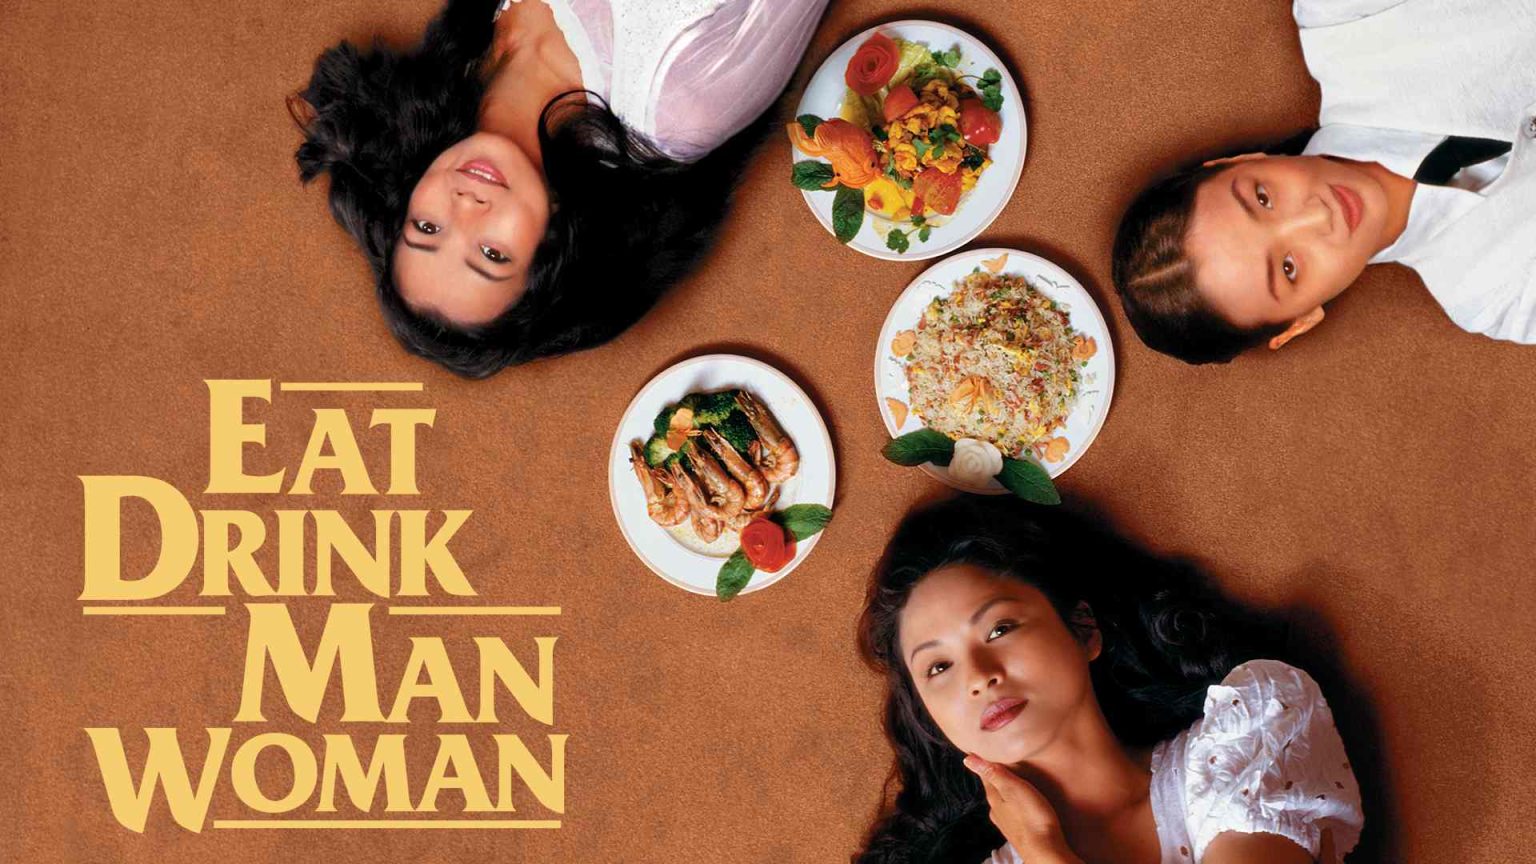 Eat drink man woman